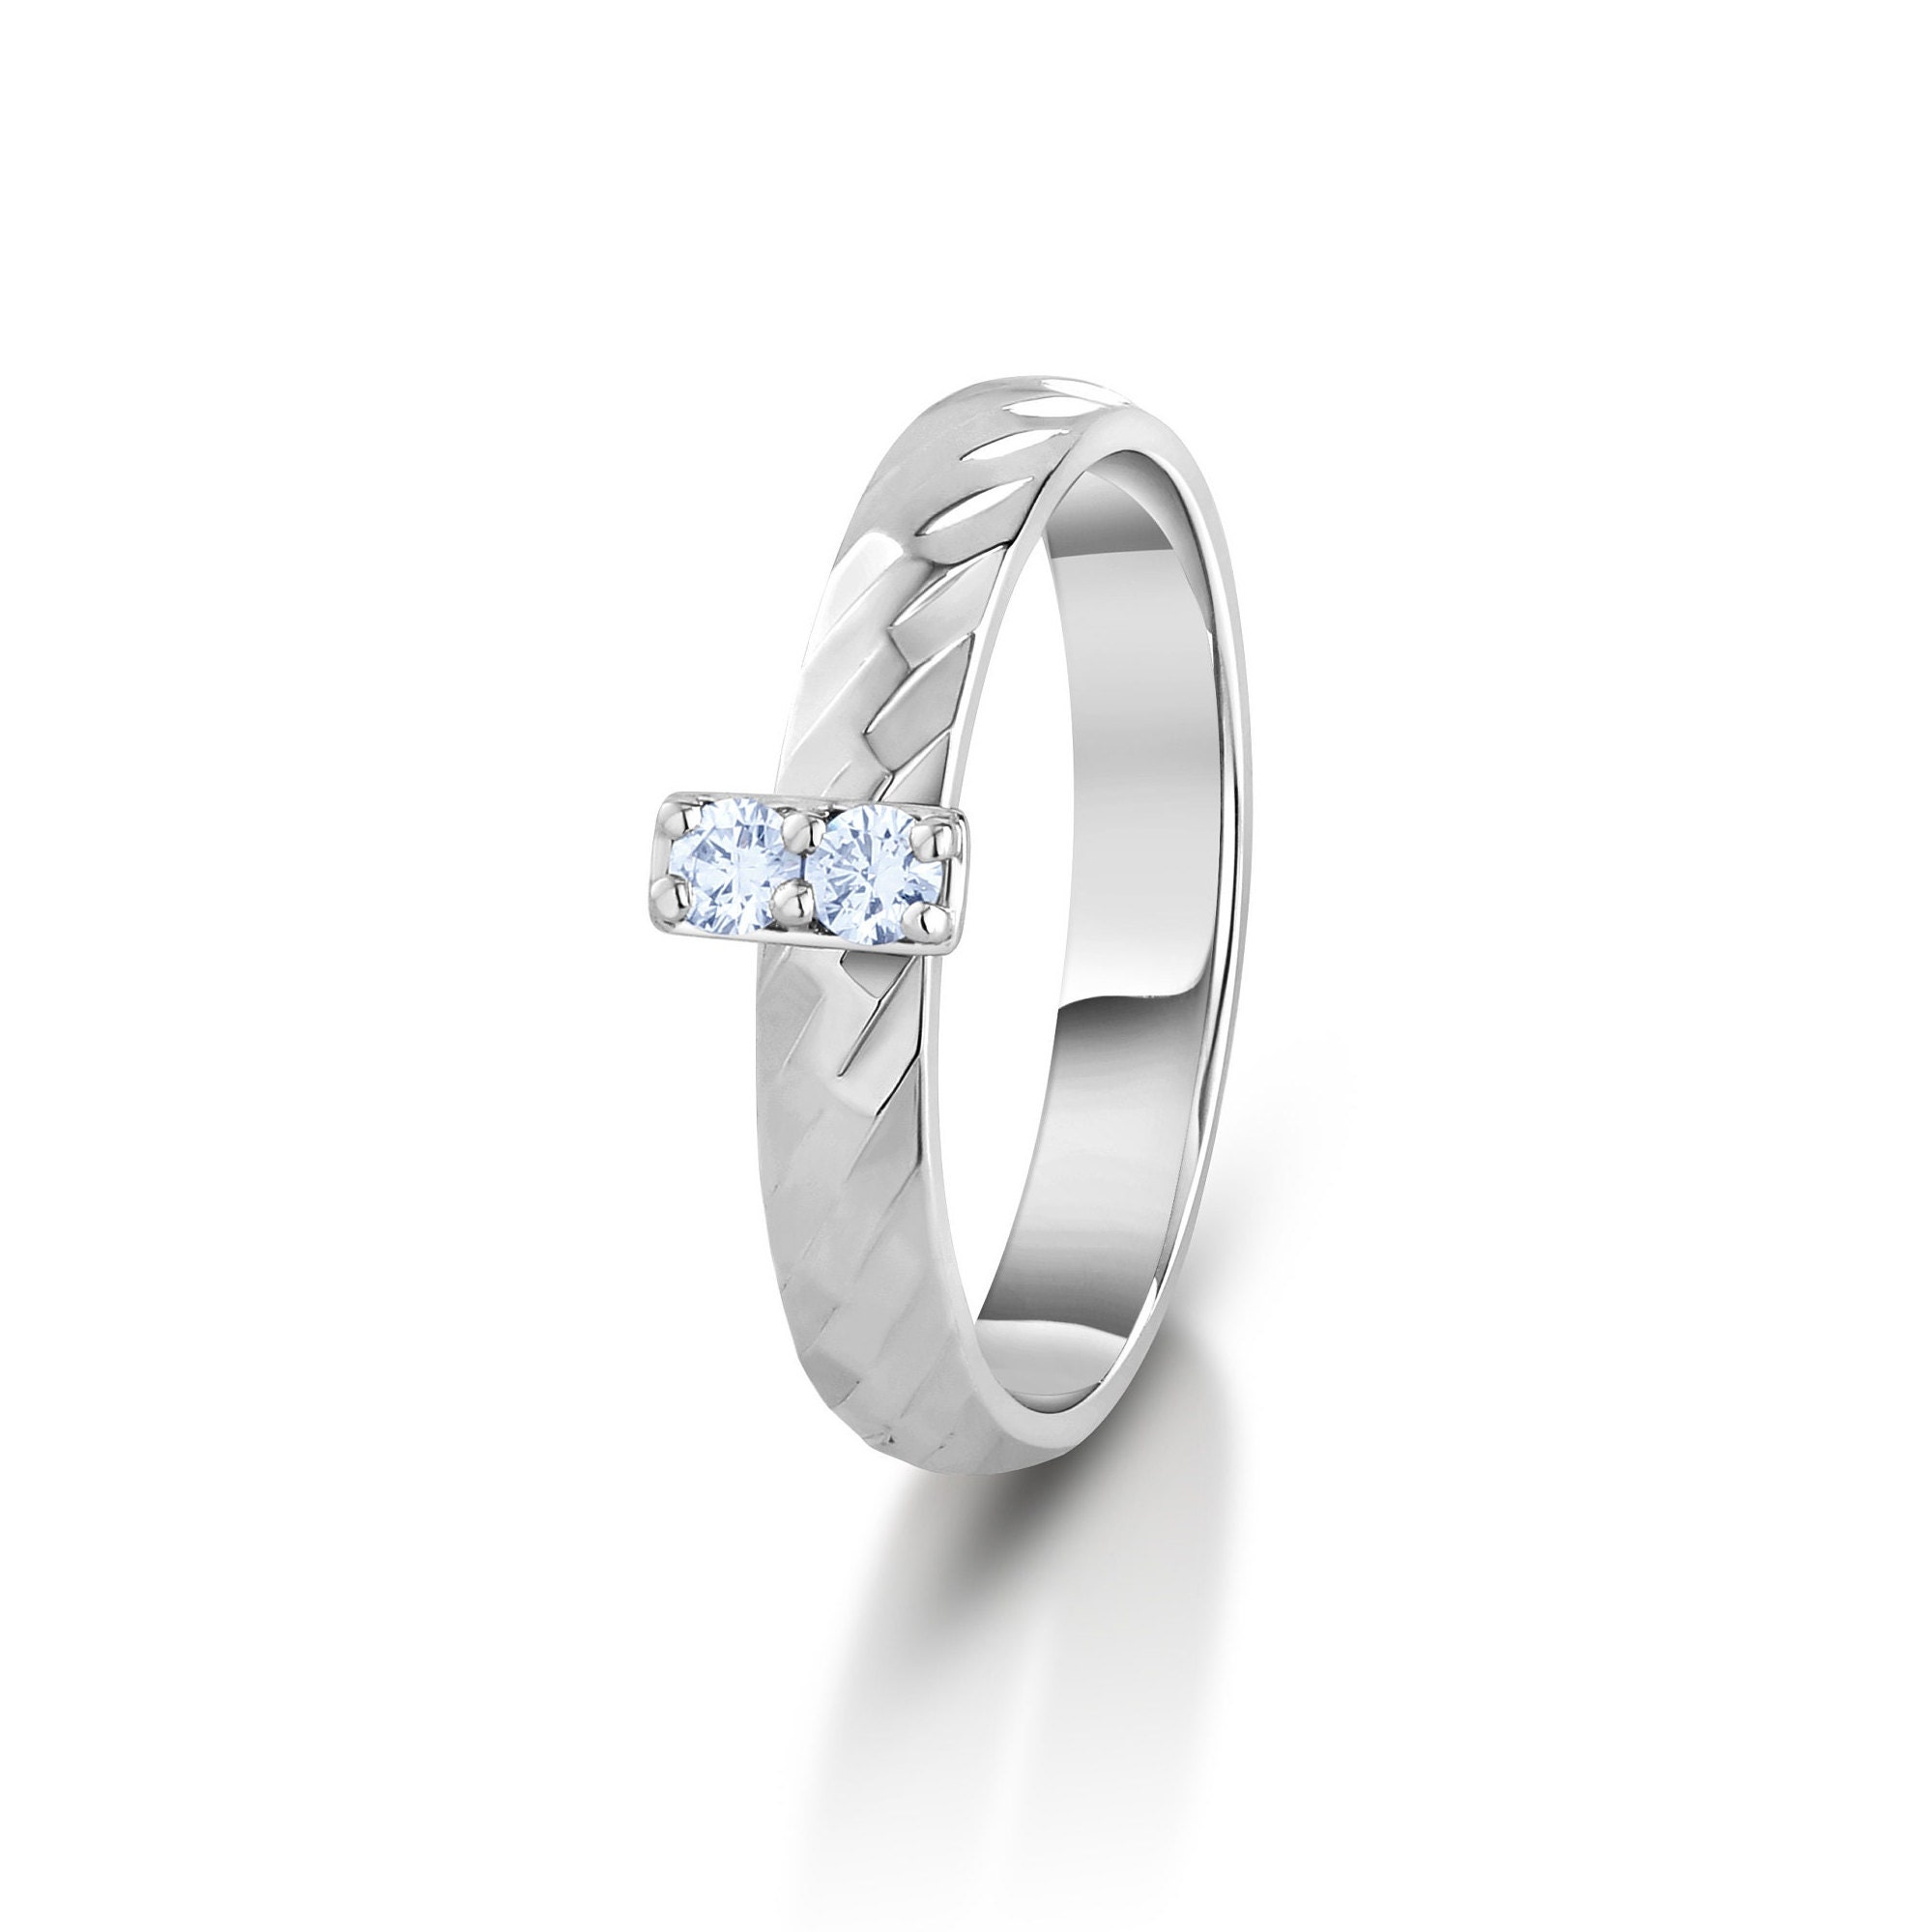 Art Deco Platinum 27.5 Carat Diamond Necklace – Robinson's Jewelers